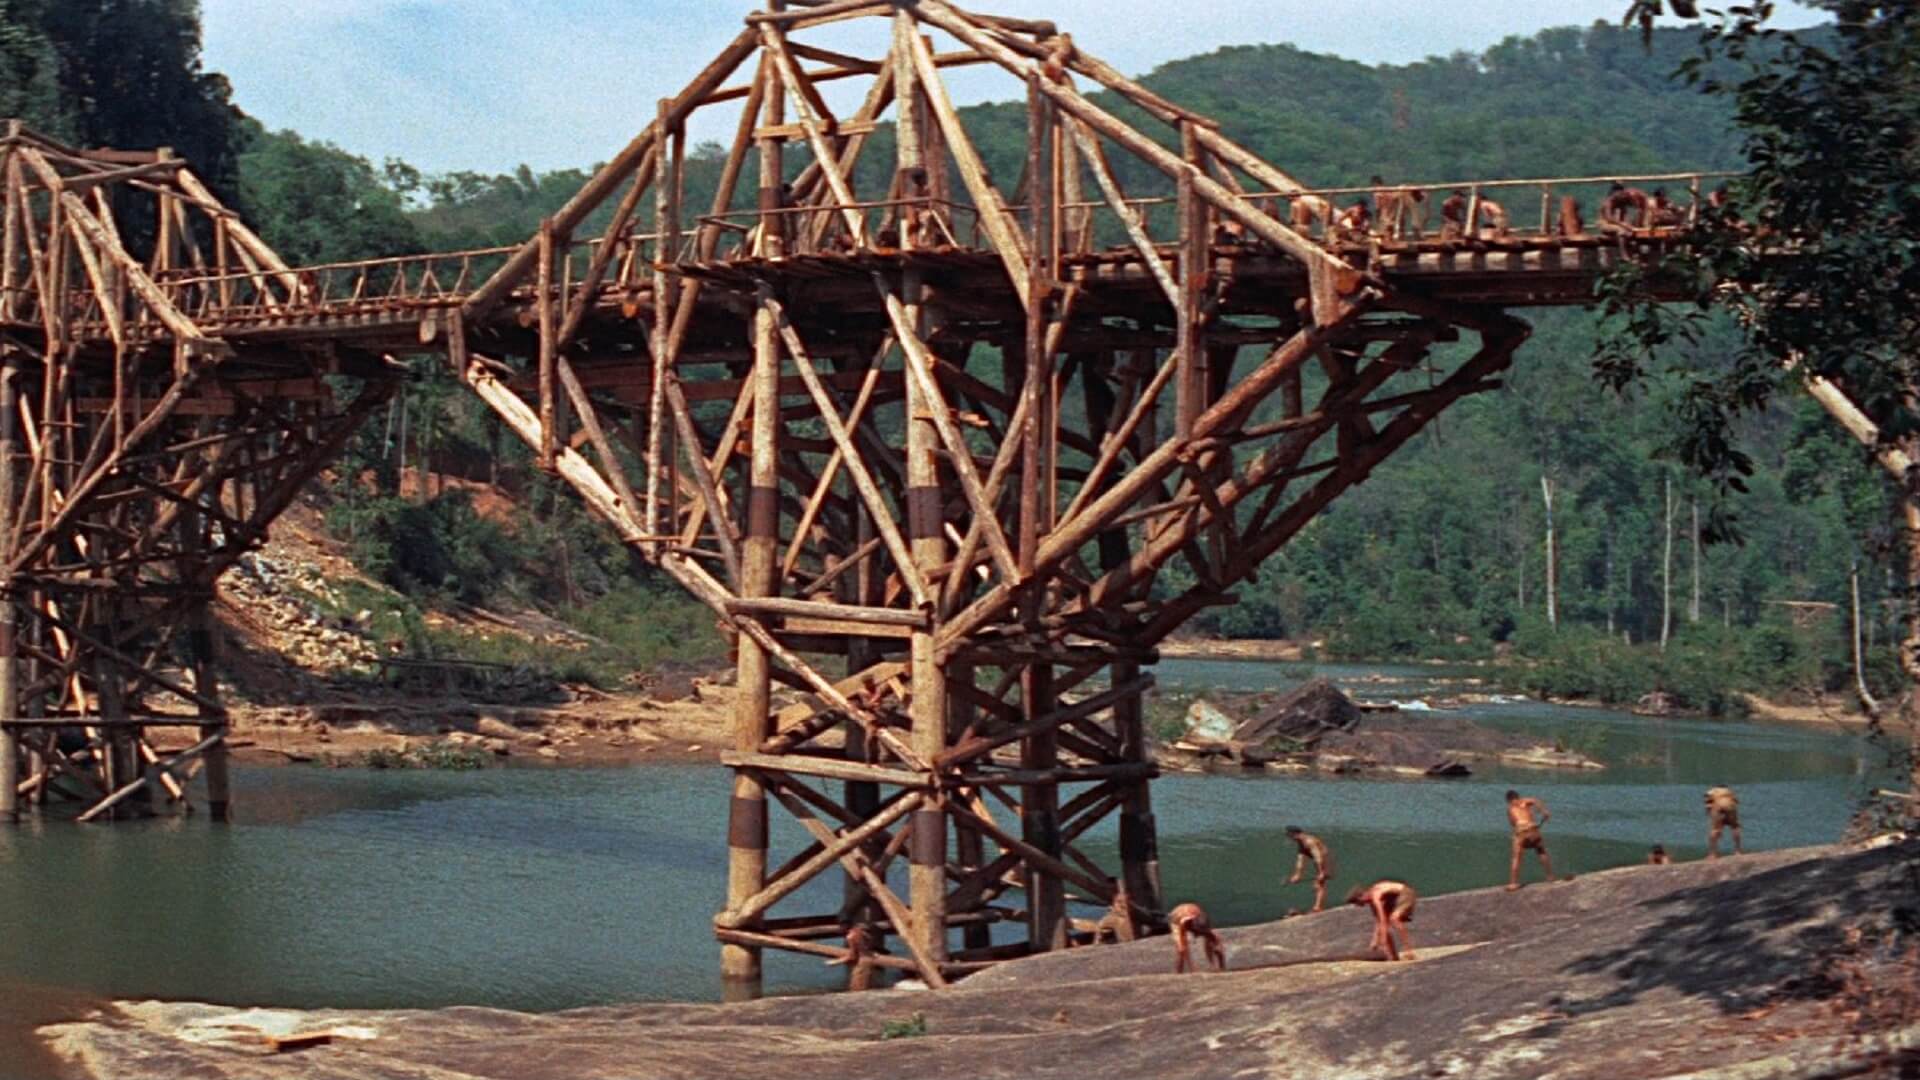 The Bridge on the River Kwai Jacob Burns Film Center